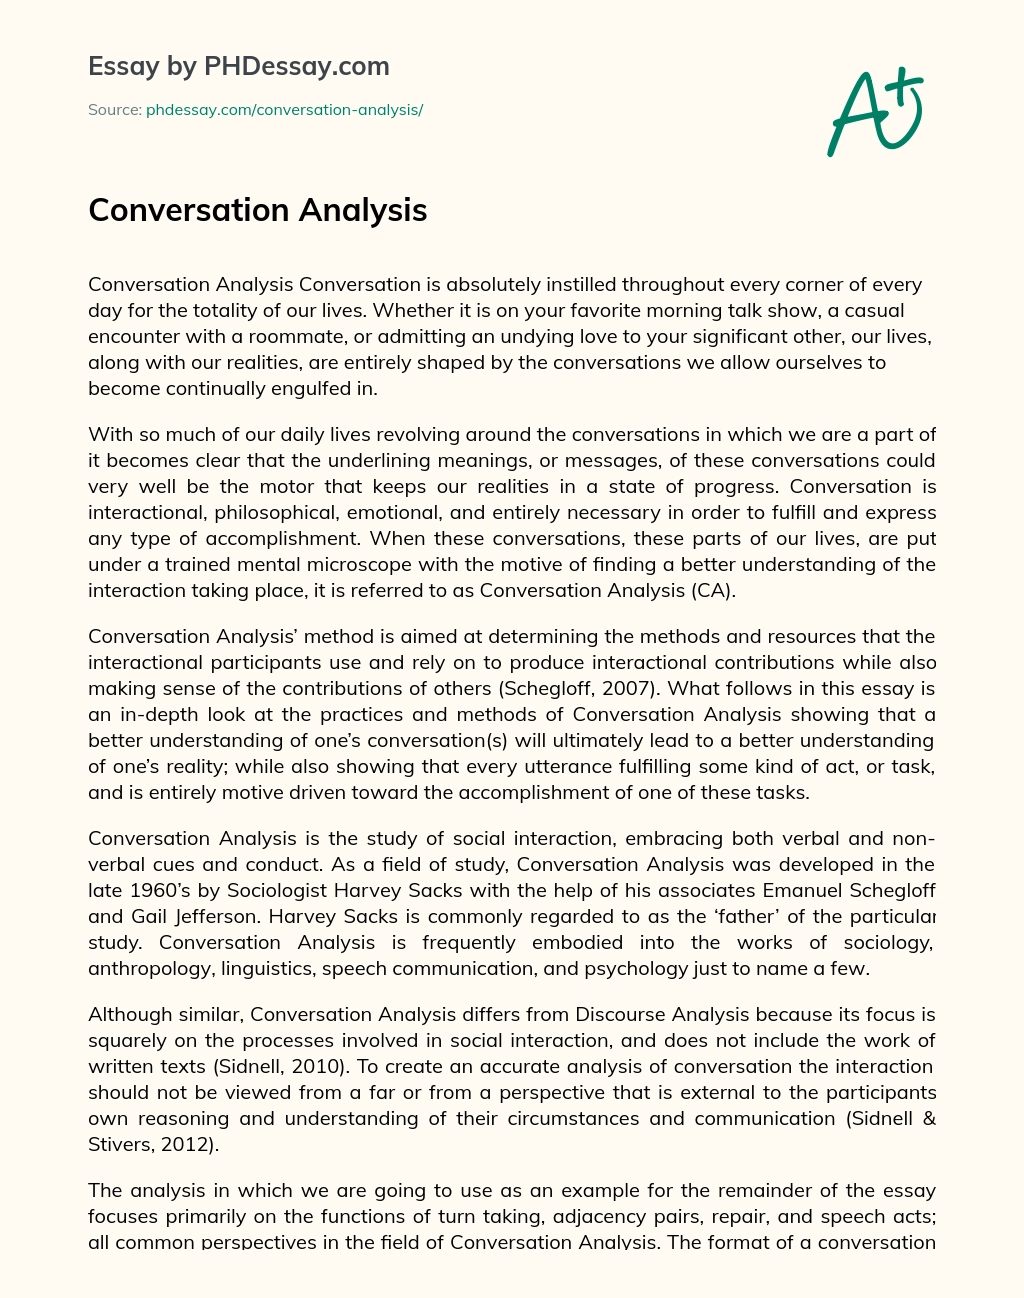 Conversation Analysis essay